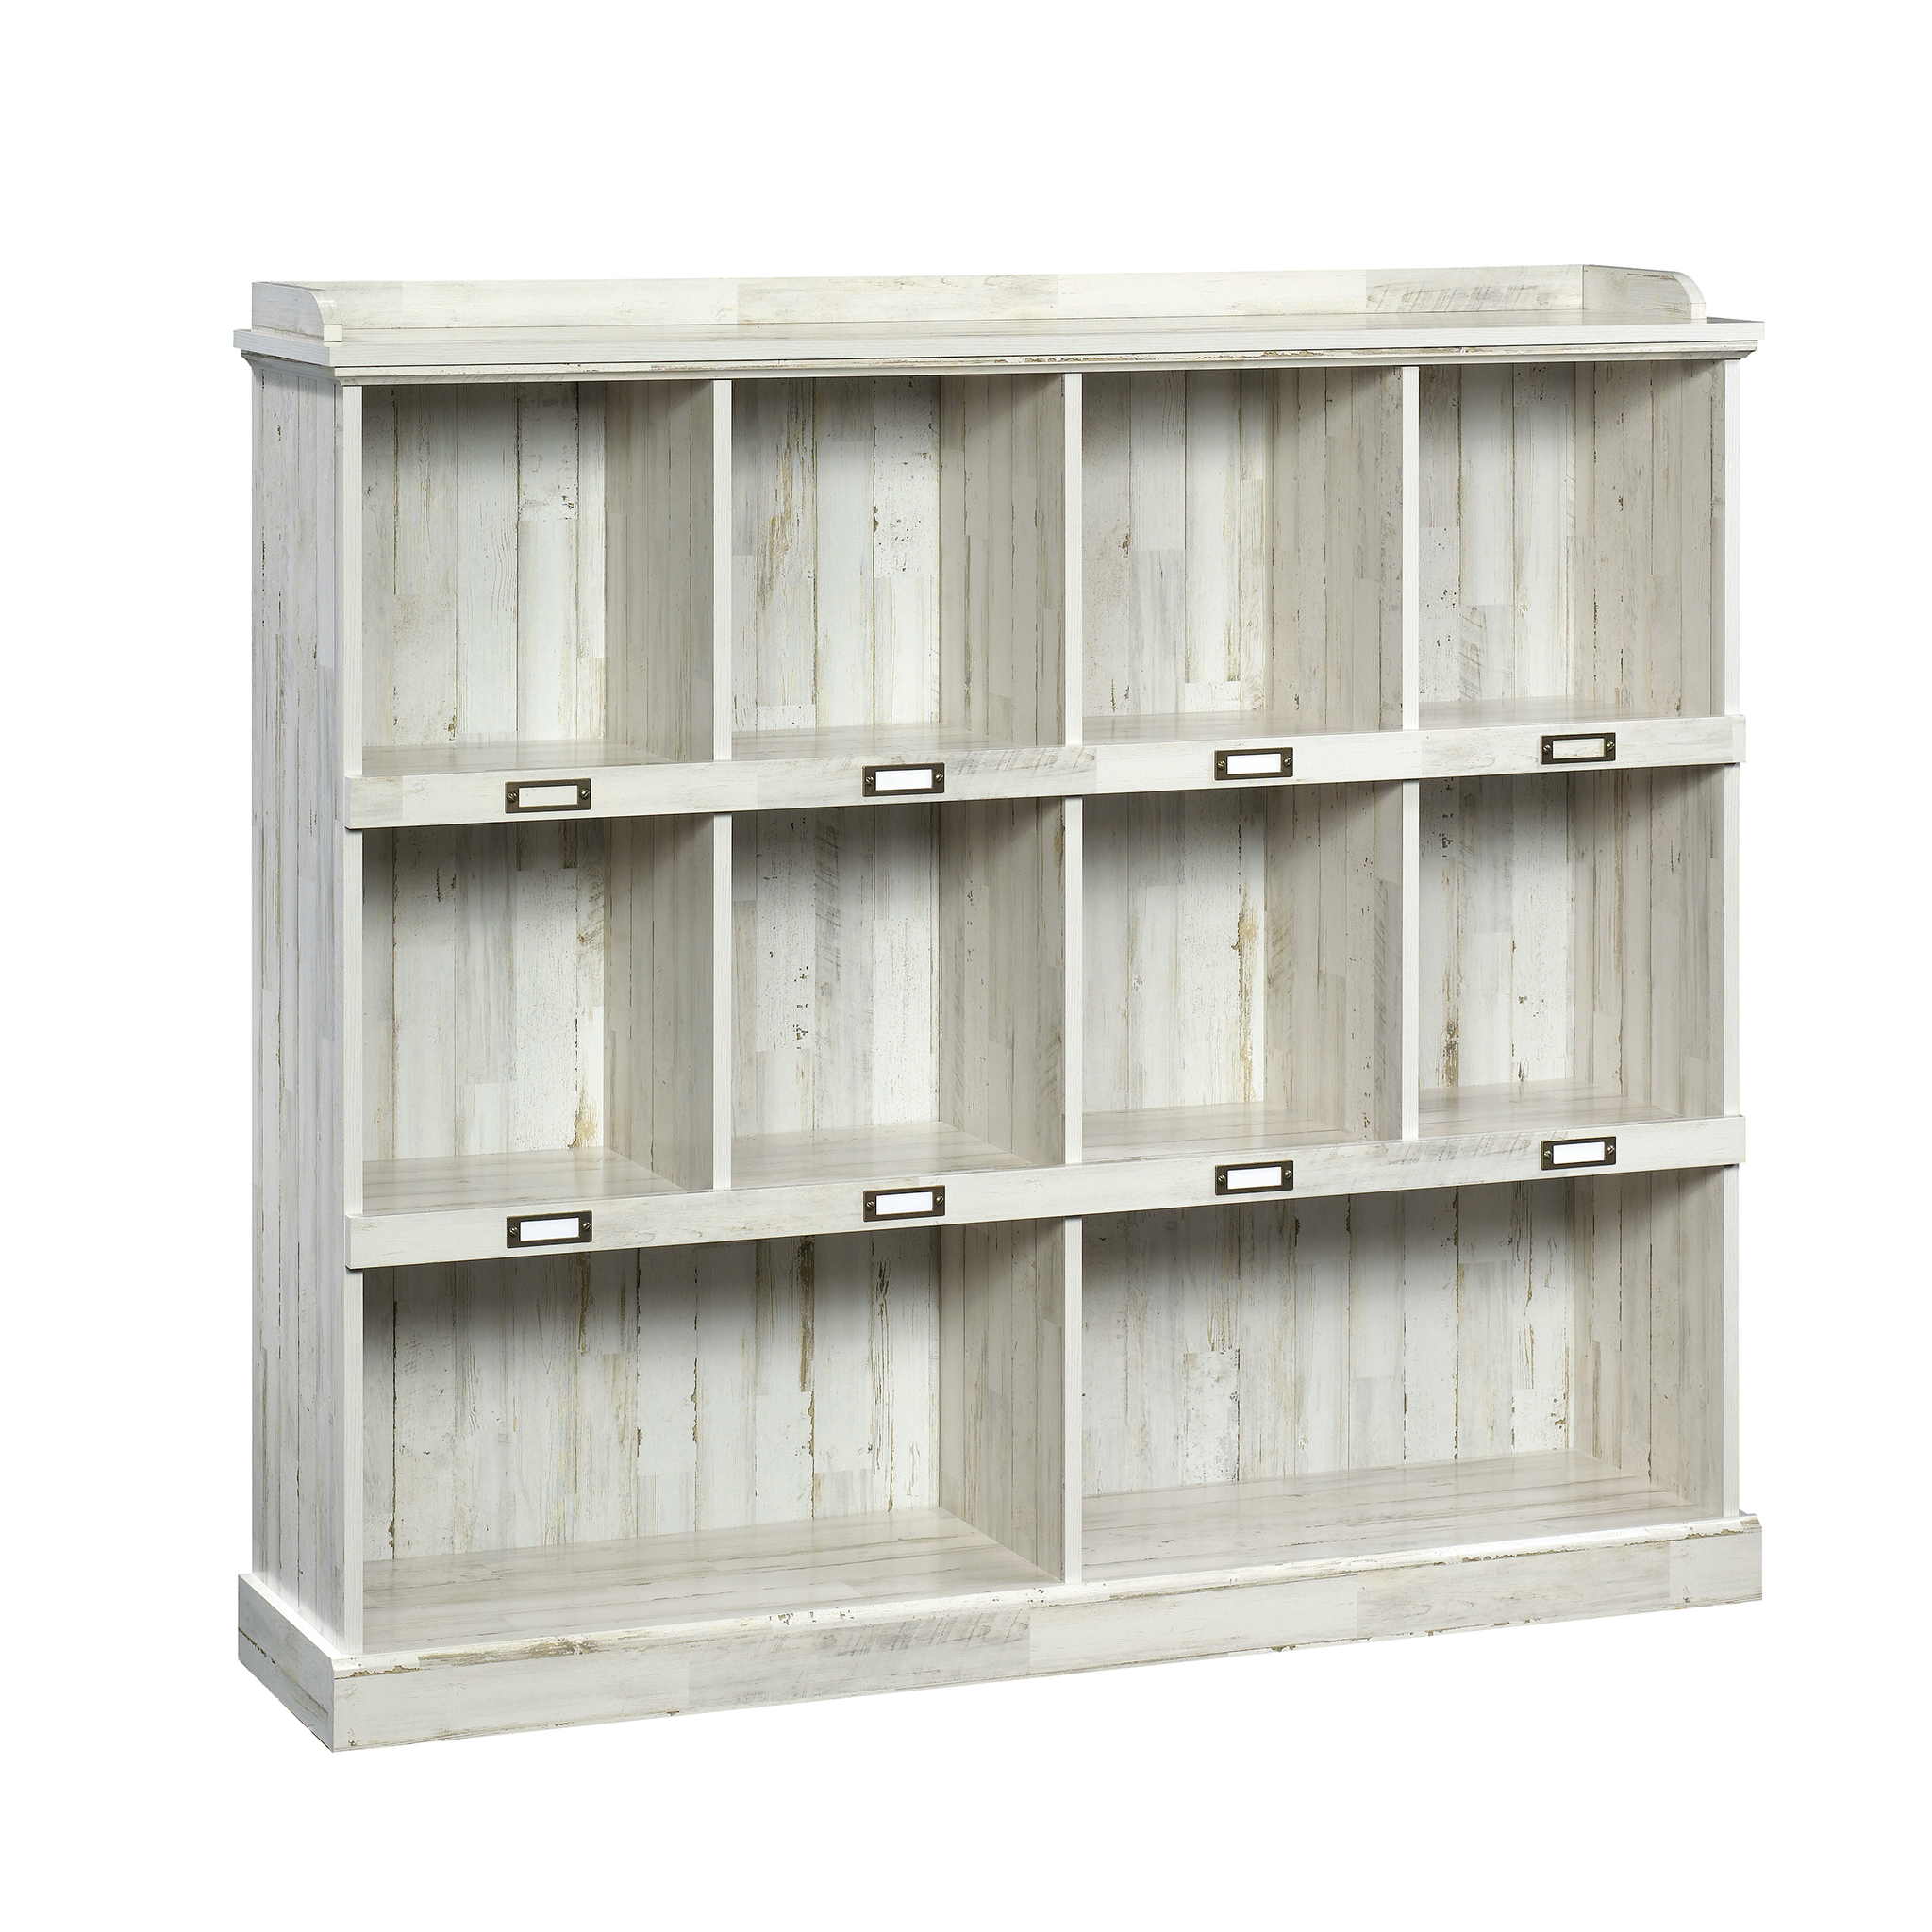 Sauder Barrister Lane® Bookcase, White Plank® finish (# 423672)